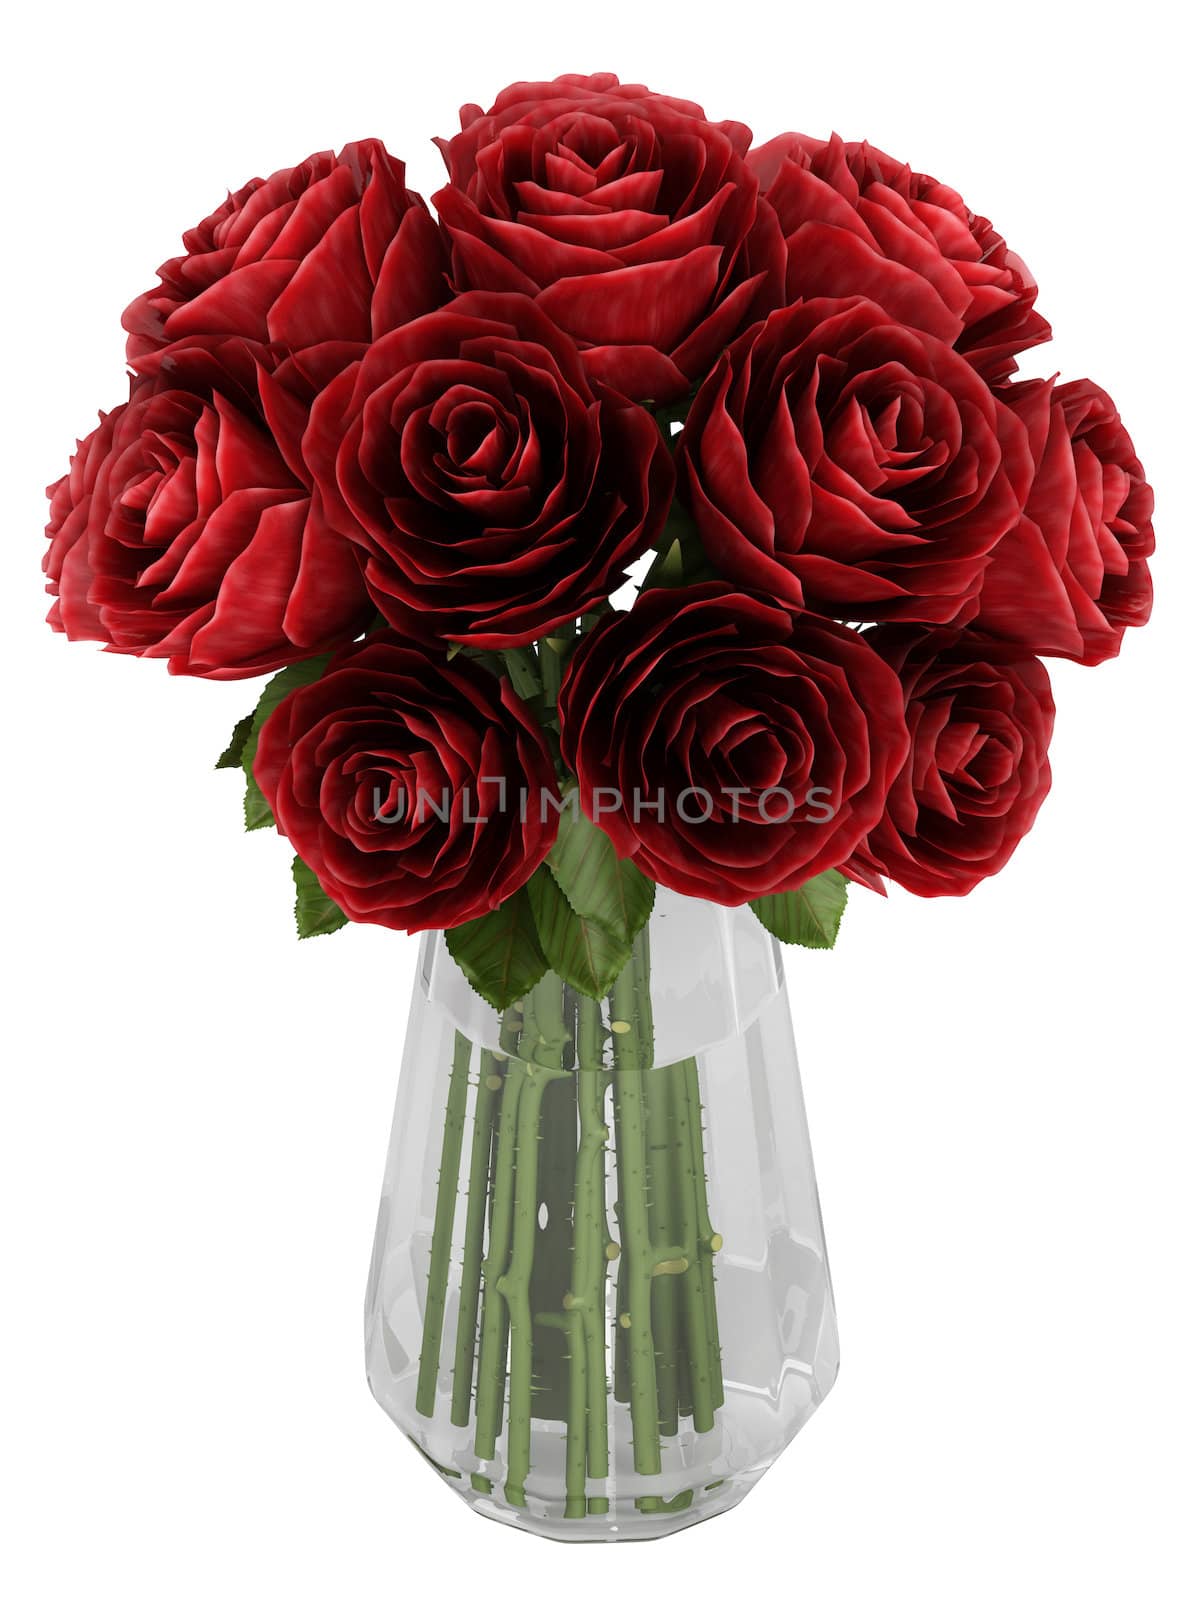 Vase of deep burgundy red roses by AlexanderMorozov